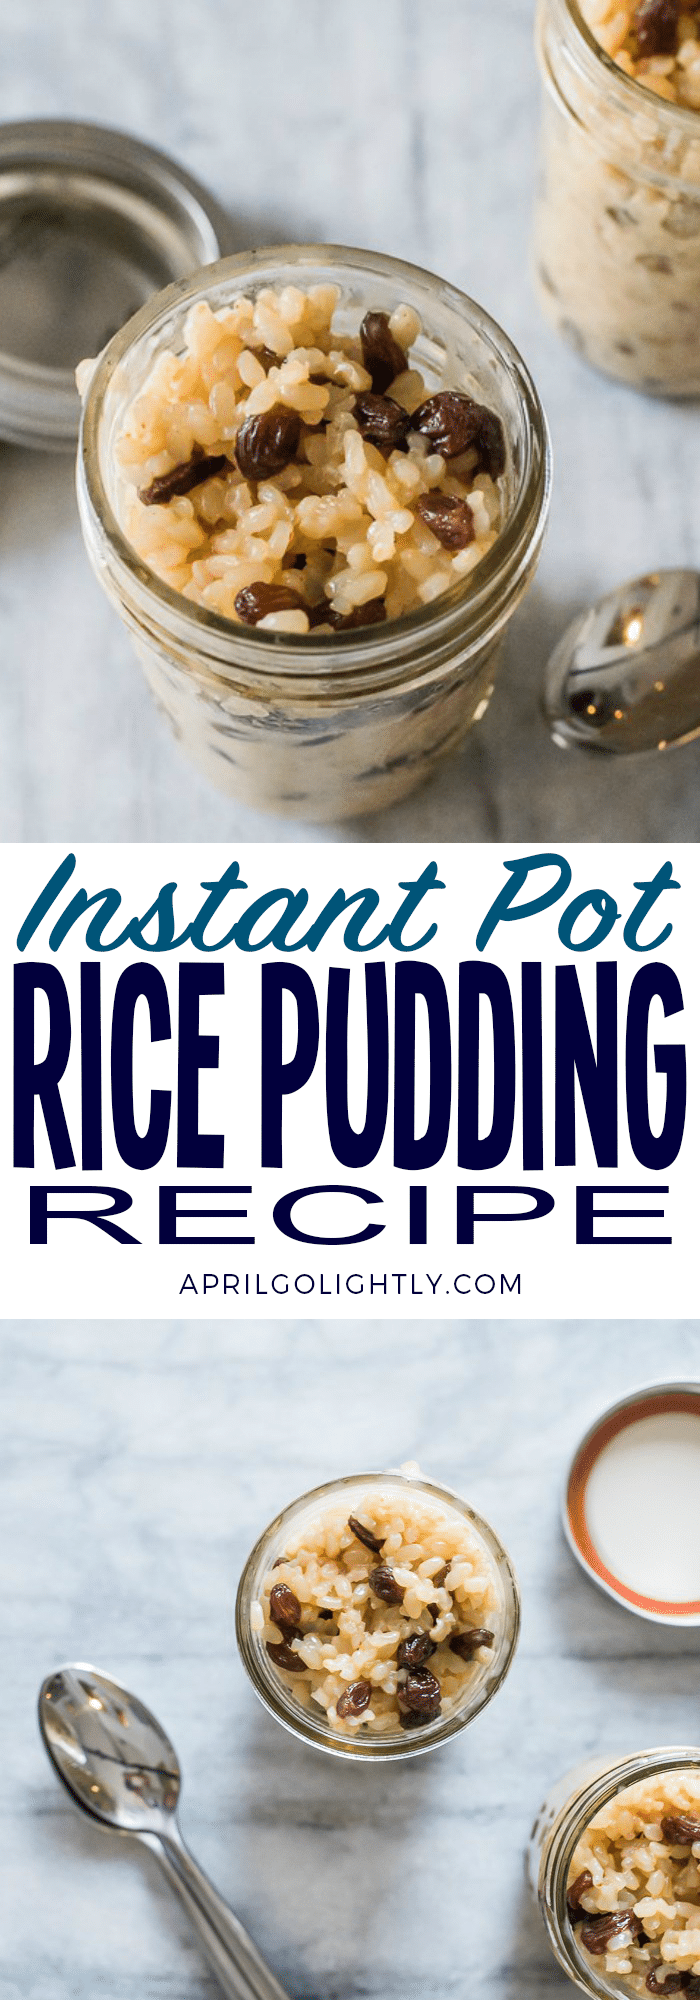 Instant Pot Rice Pudding Recipe with cinnamon and raisin